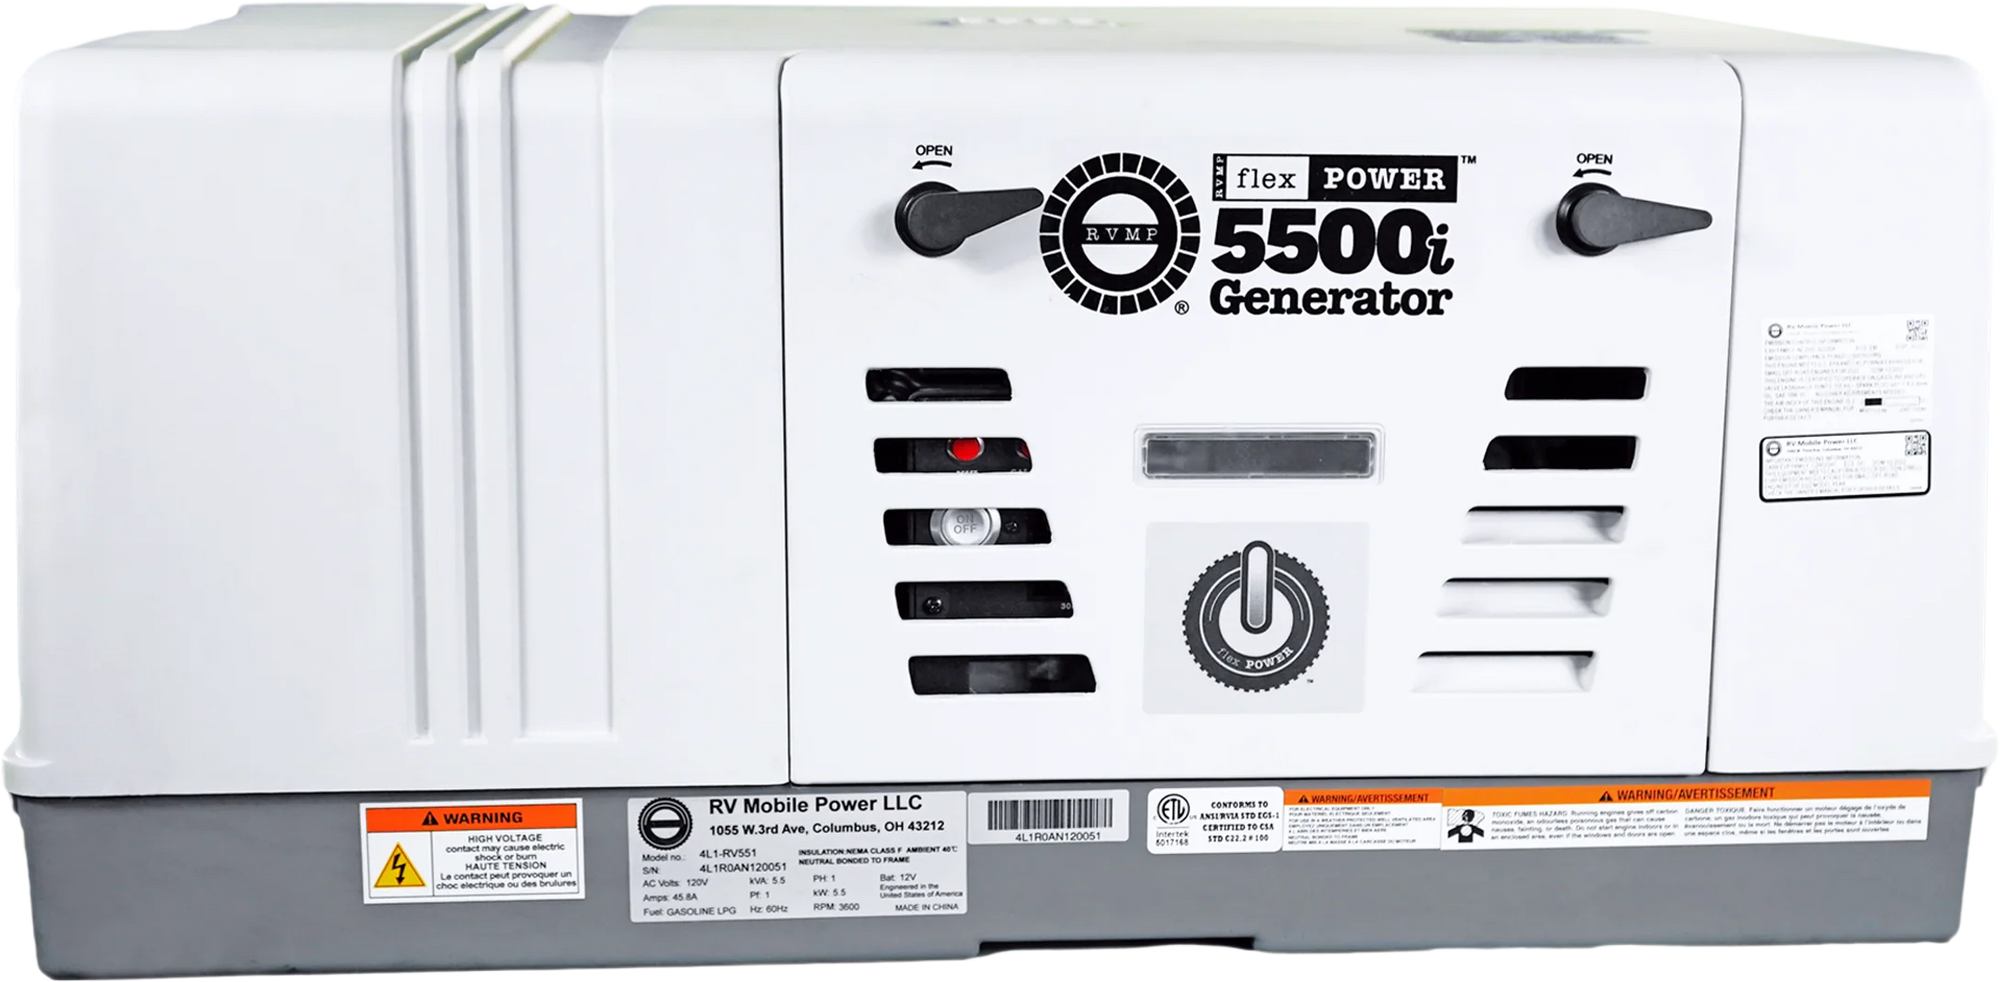 RVMP-Flex-Power-5500i-Dual-Fuel-Generator-850041427126 (1)